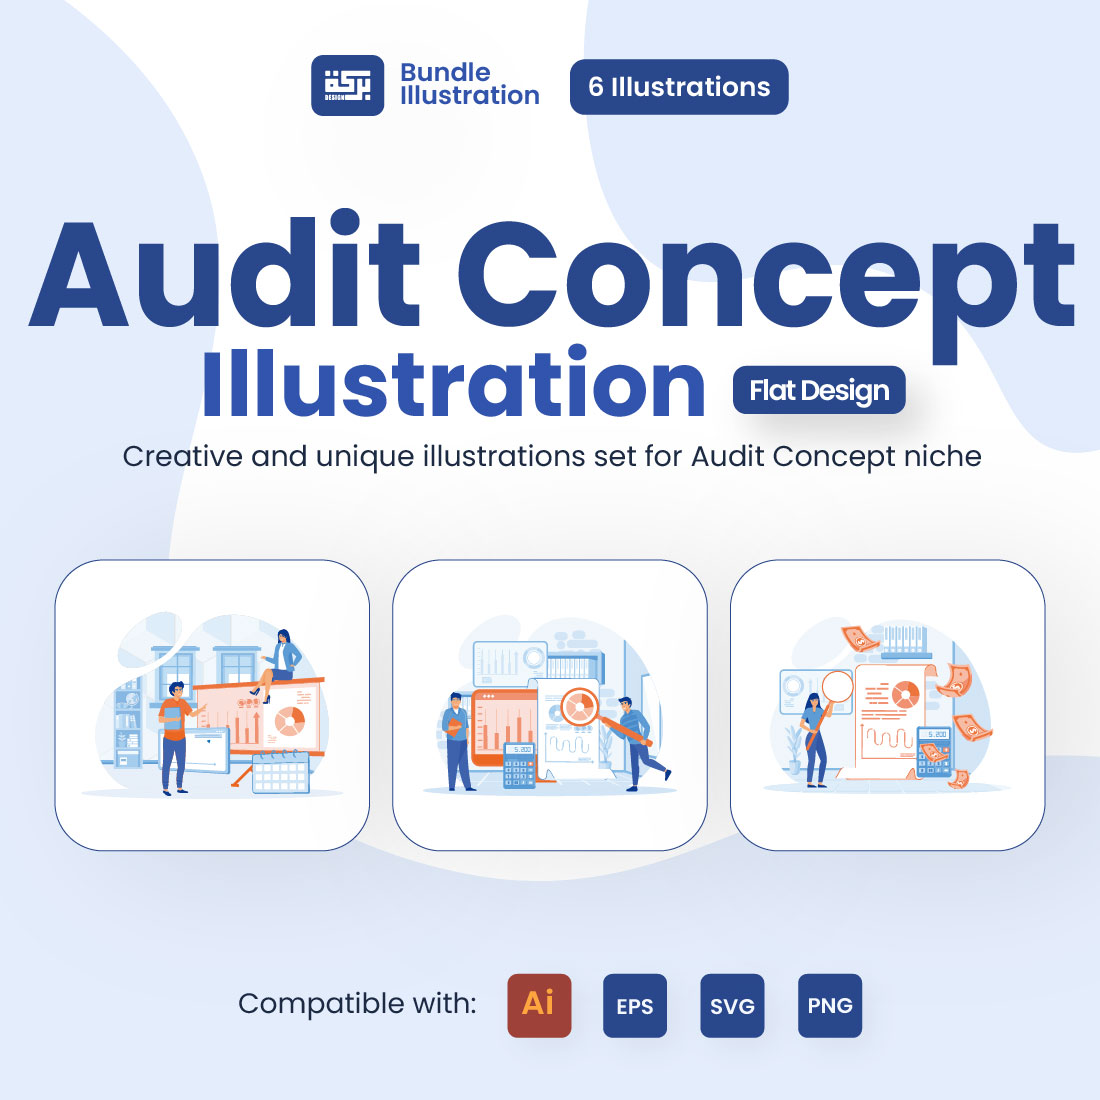 Illustration of Audit Concept cover image.